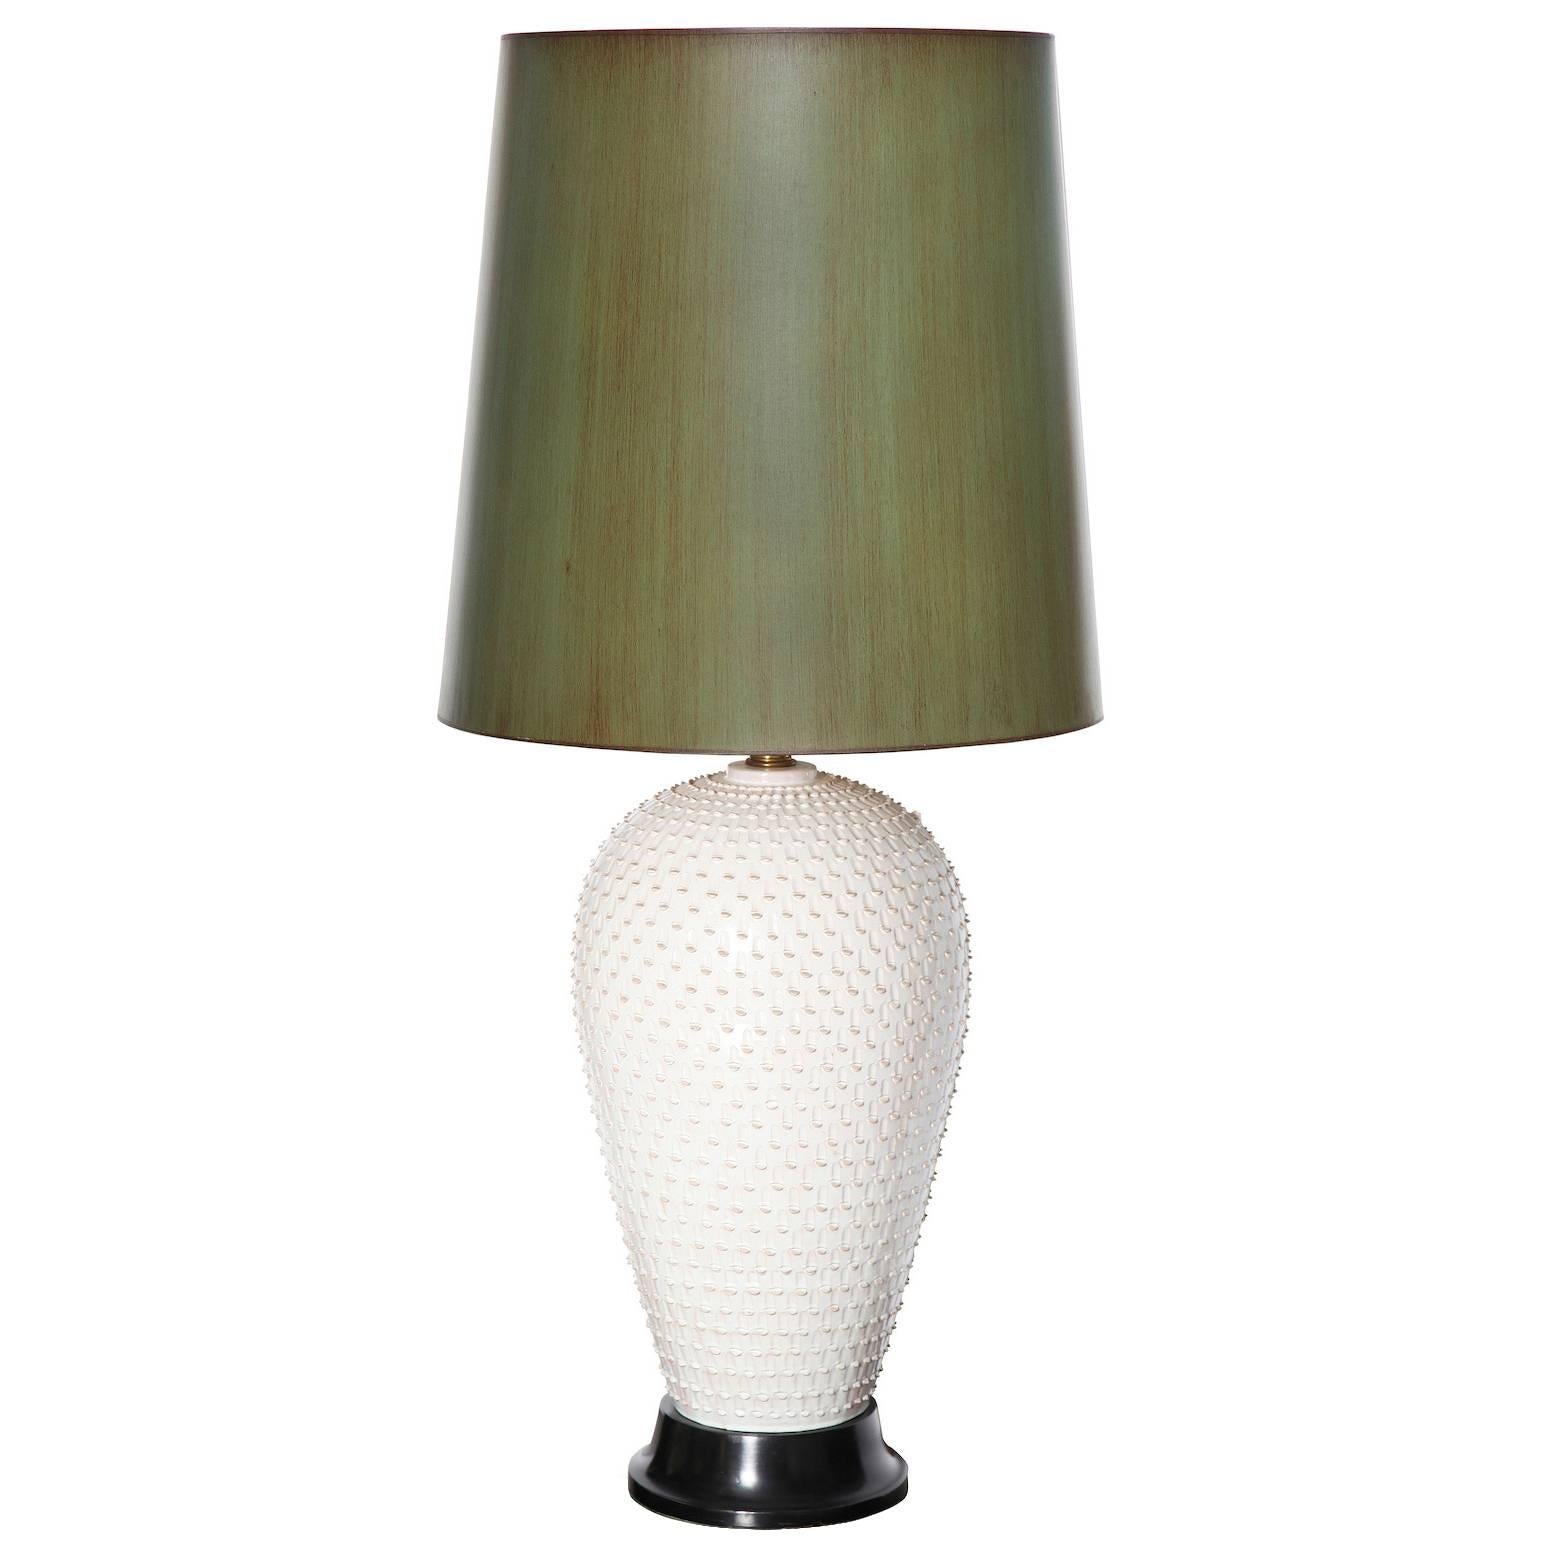 Paul Laszlo Table Lamp